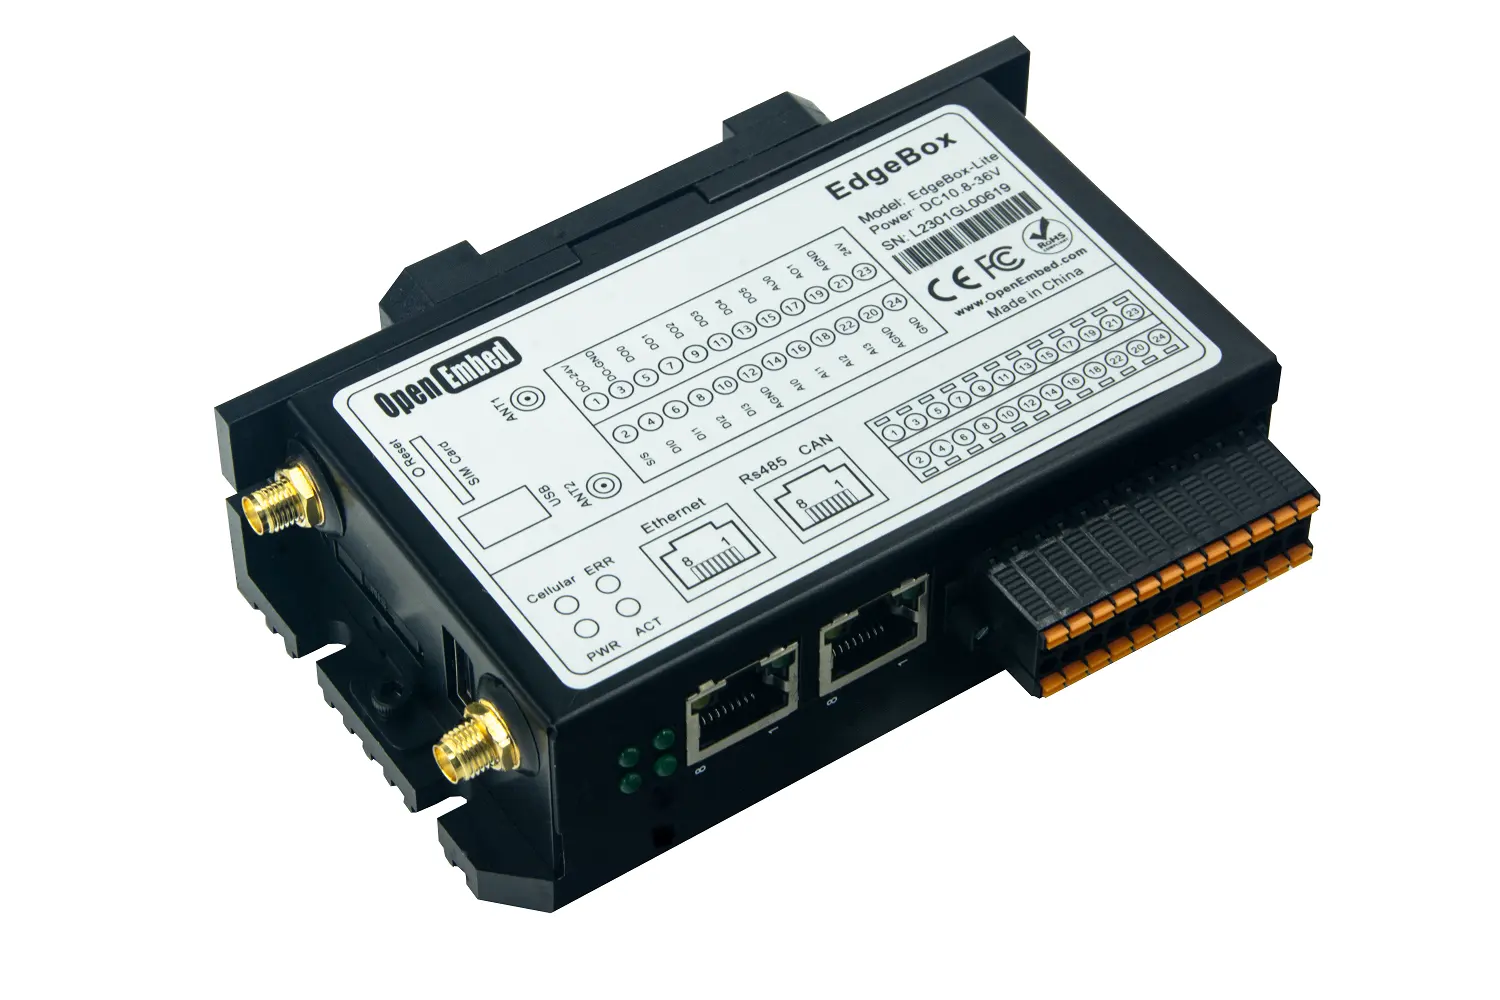 Edgebox-esp-100 ESP32-based 산업용 제어 호스트 PLC I 프로그래밍 가능 컨트롤러 Linux 4G LORAEdge 계산